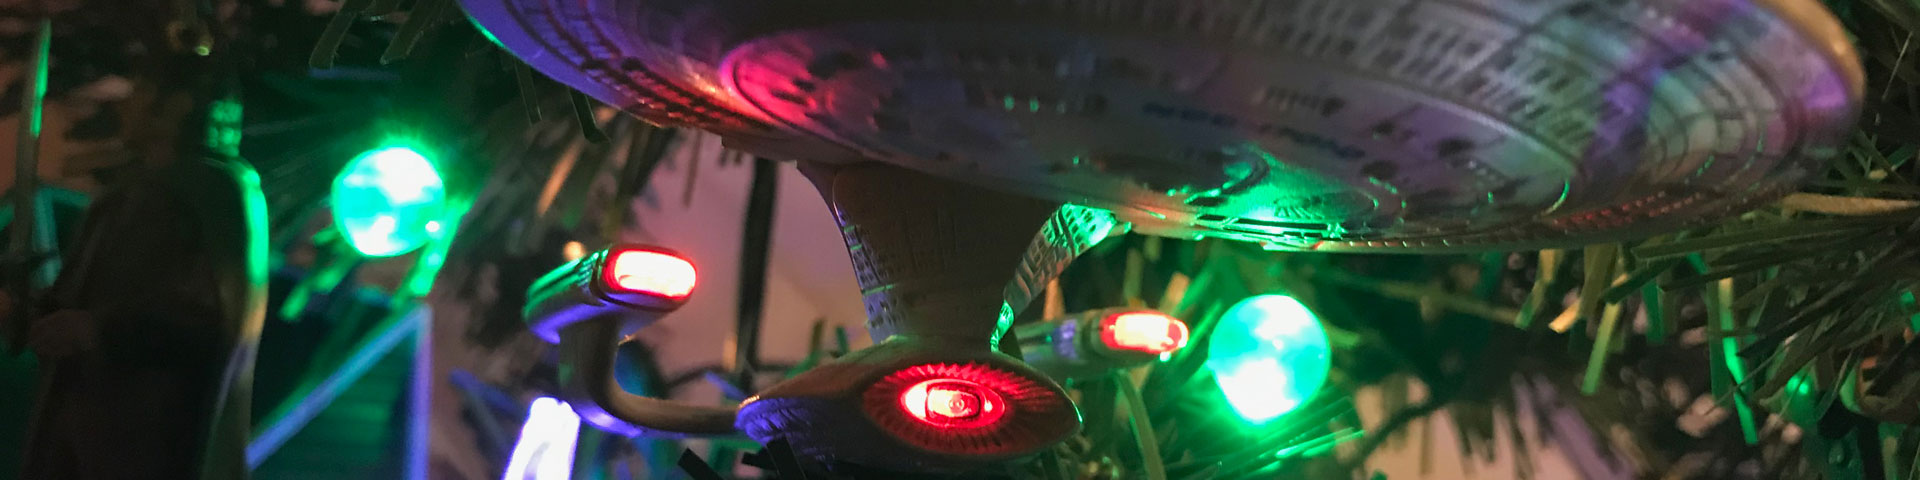 The Star Trek Enterprise 1701-D, illluminated by Christmas tree lights.